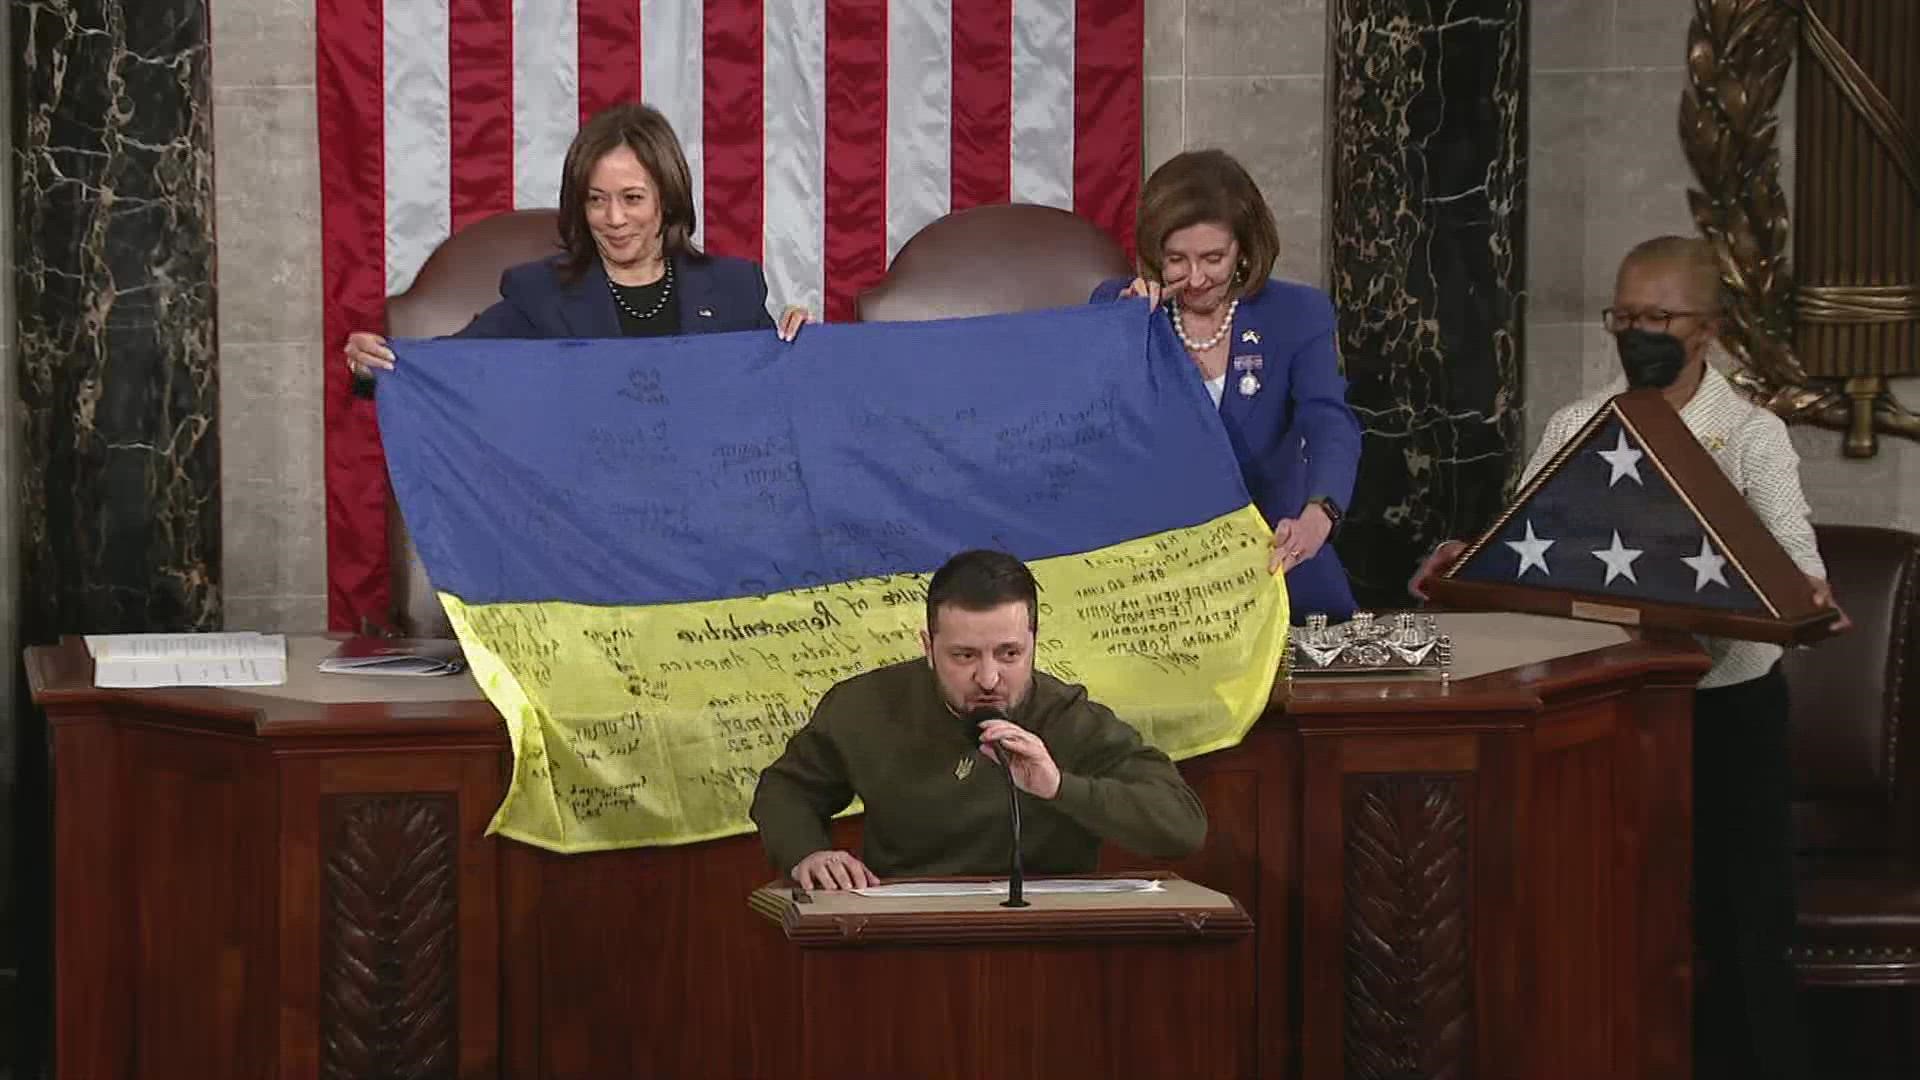 Ukrainian President Volodymyr Zelenskyy gave an address to Congress, which Vice President Kamala Harris attended.